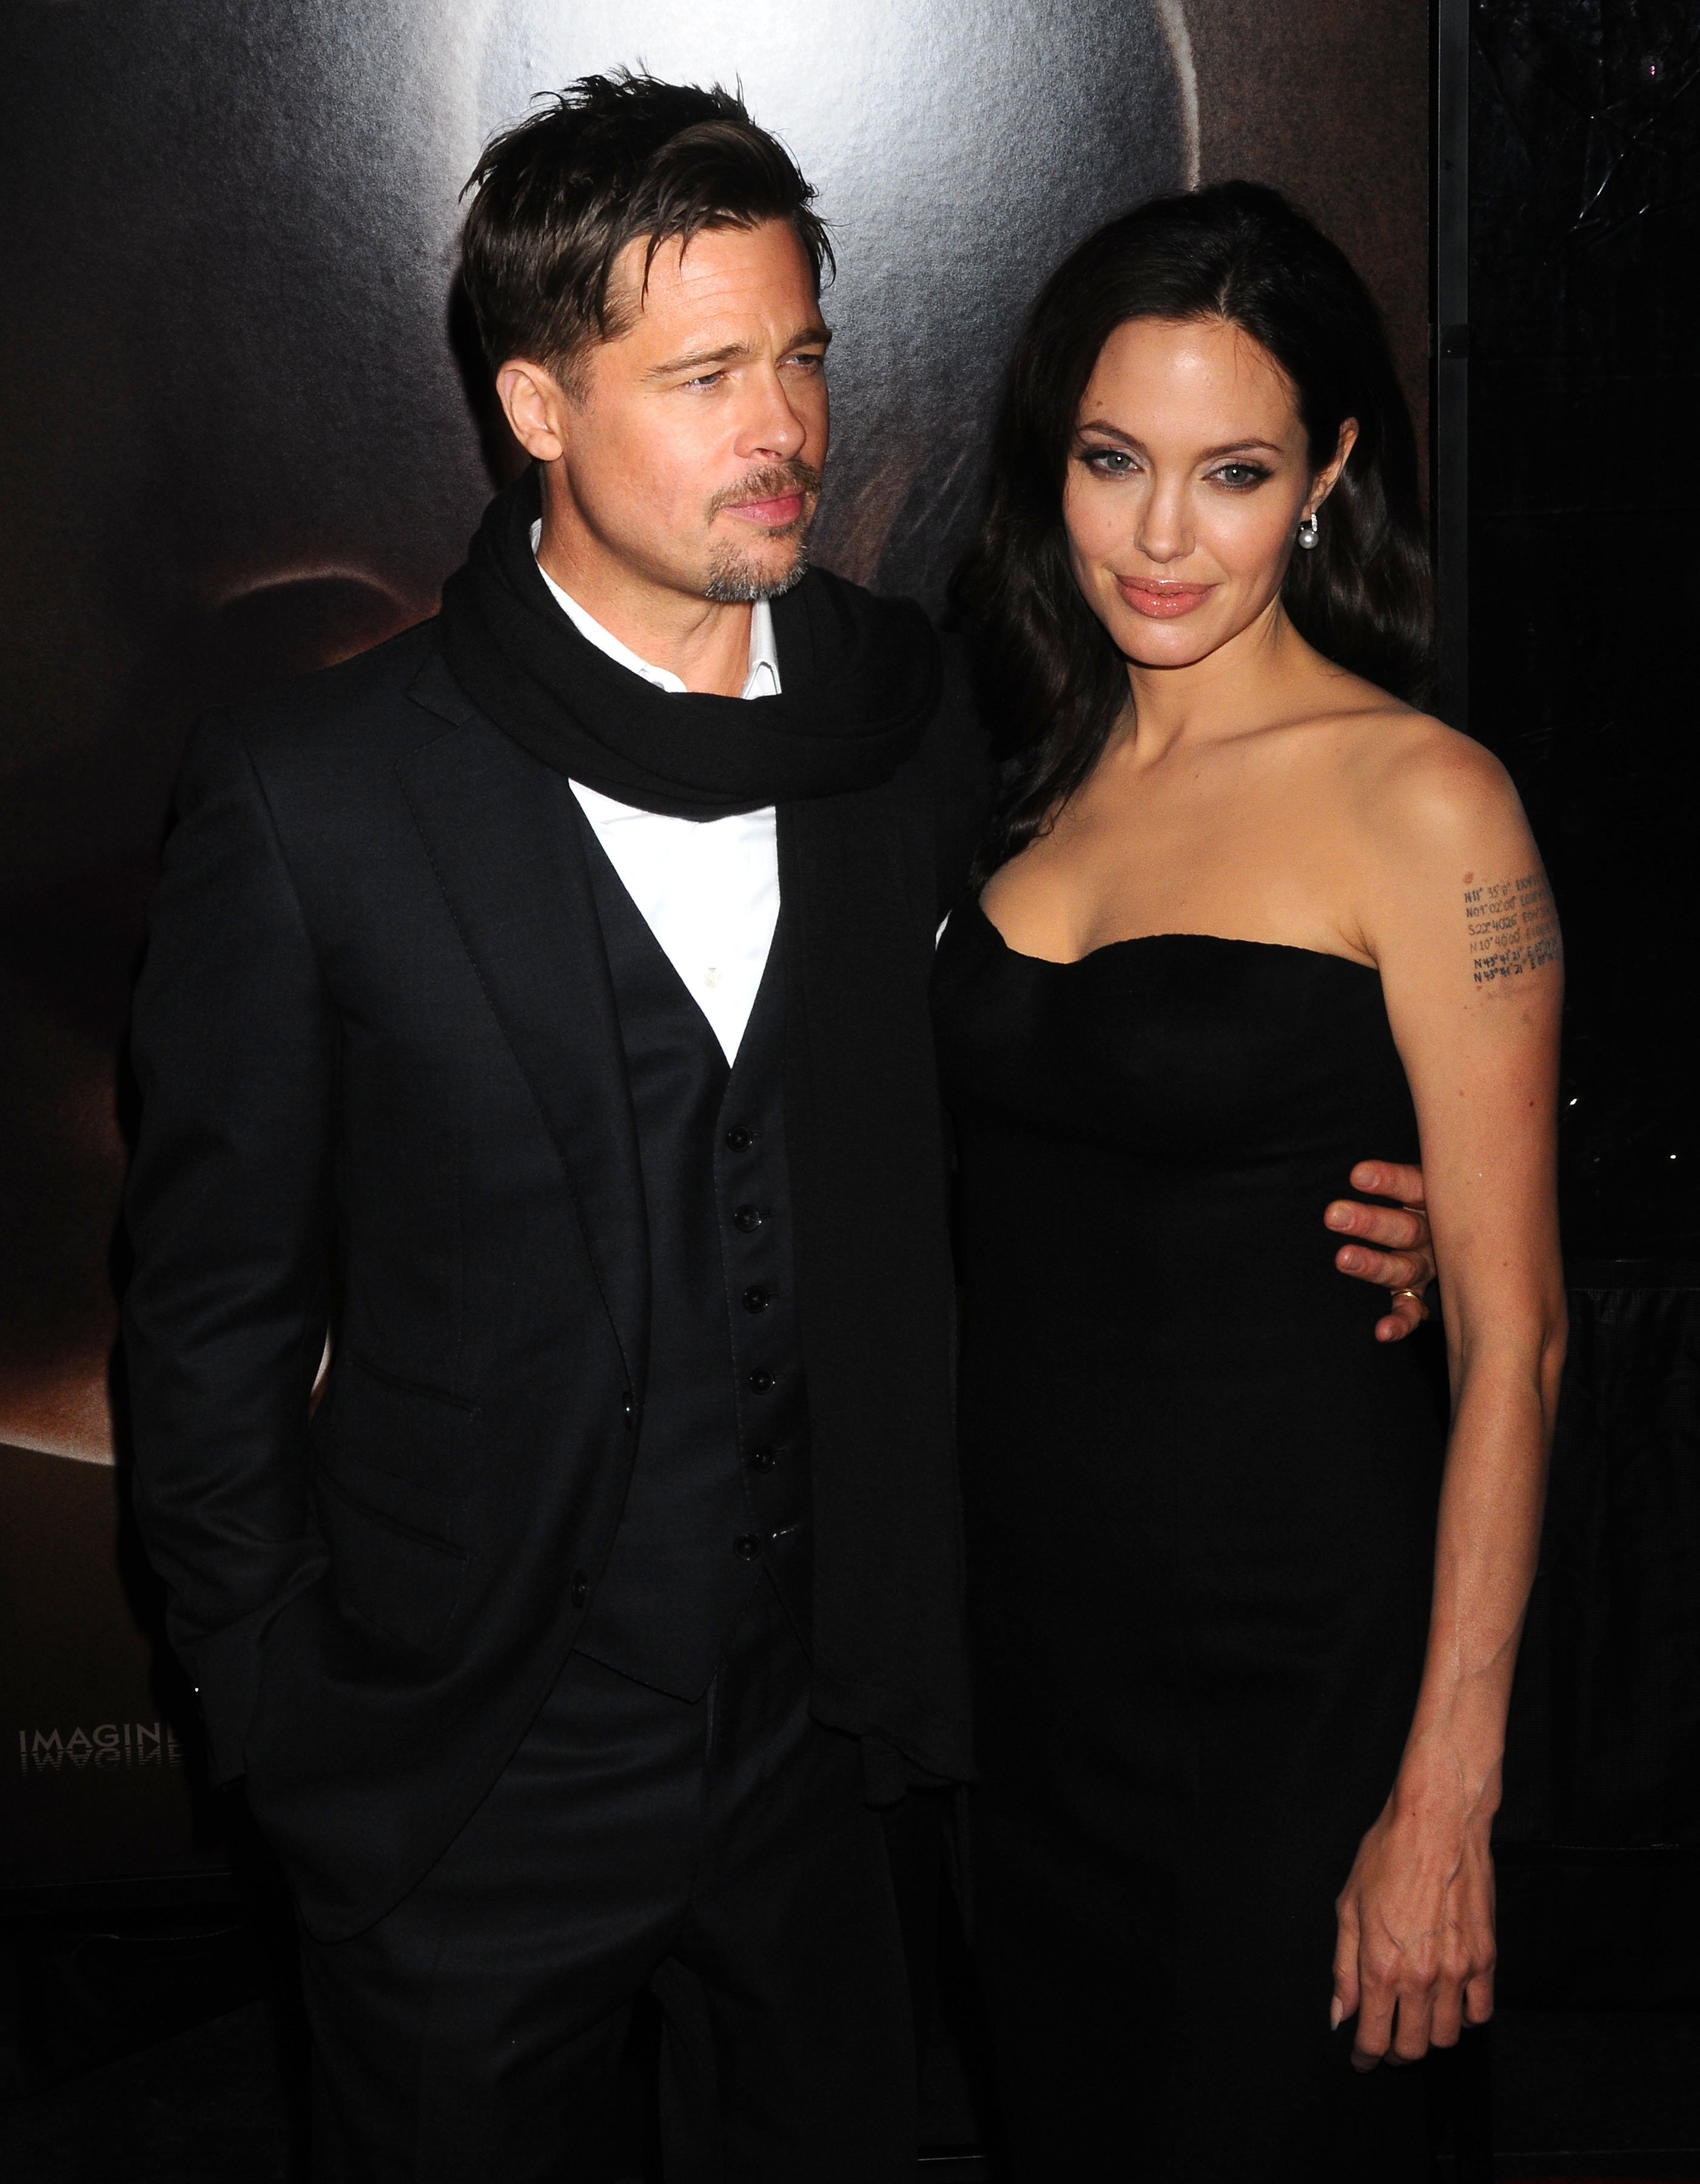 Бывший муж анджелины джоли. Муж Анджелины Джоли. Первый муж Анджелины Джоли. Анджелина Джоли и ее муж. Муж Анджелина Анджелина Джоли.